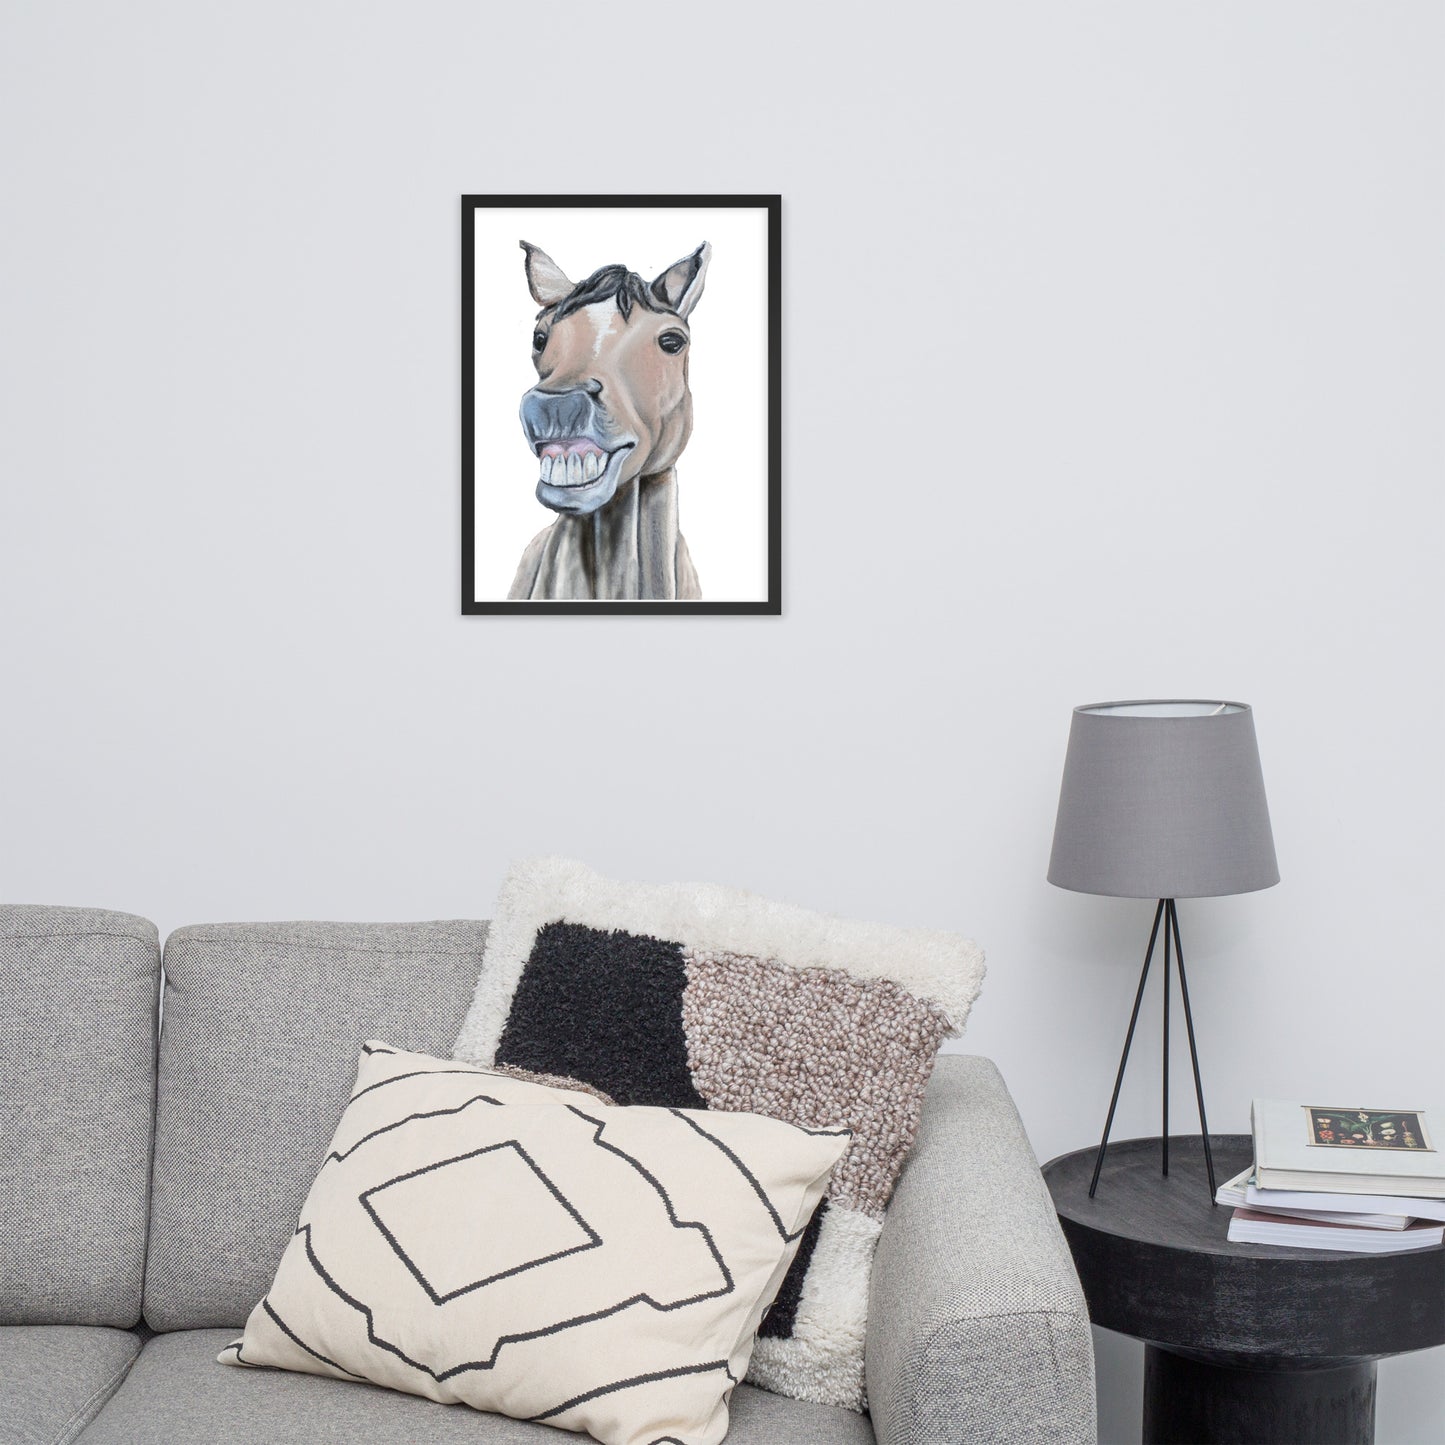 Manny the Smiling Horse Framed poster